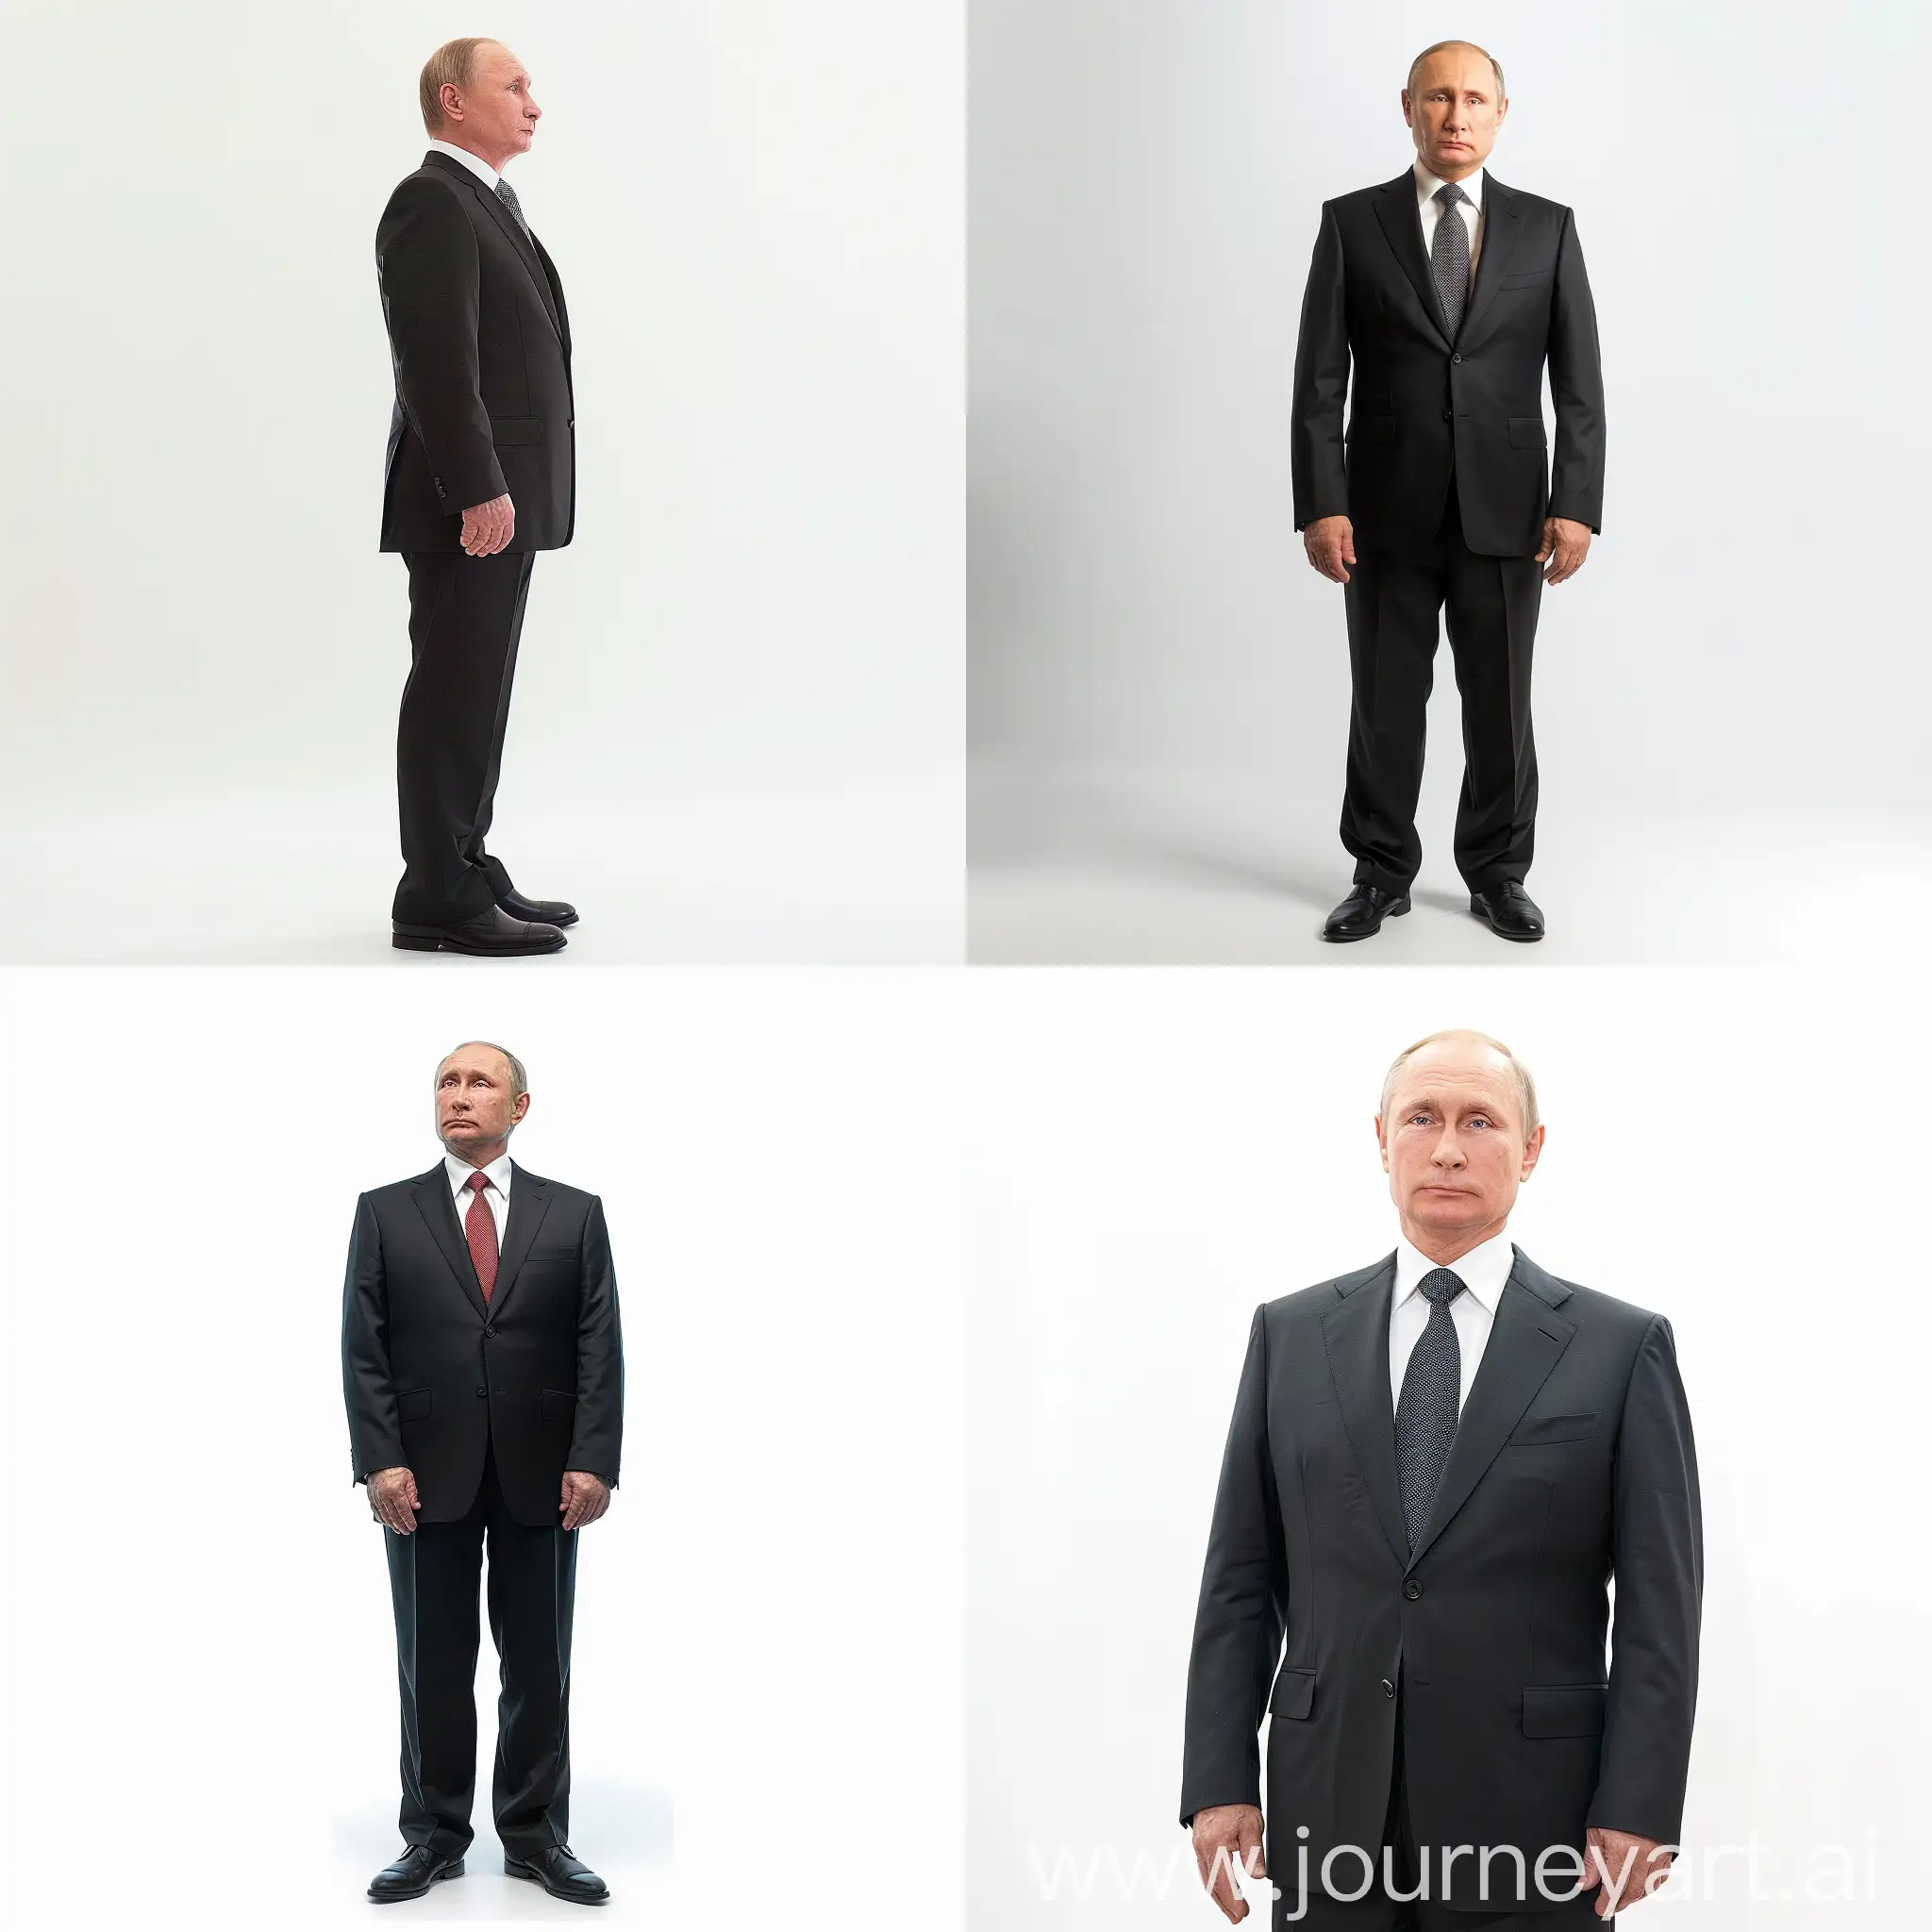 Vladimir-Putin-Standing-Against-White-Background